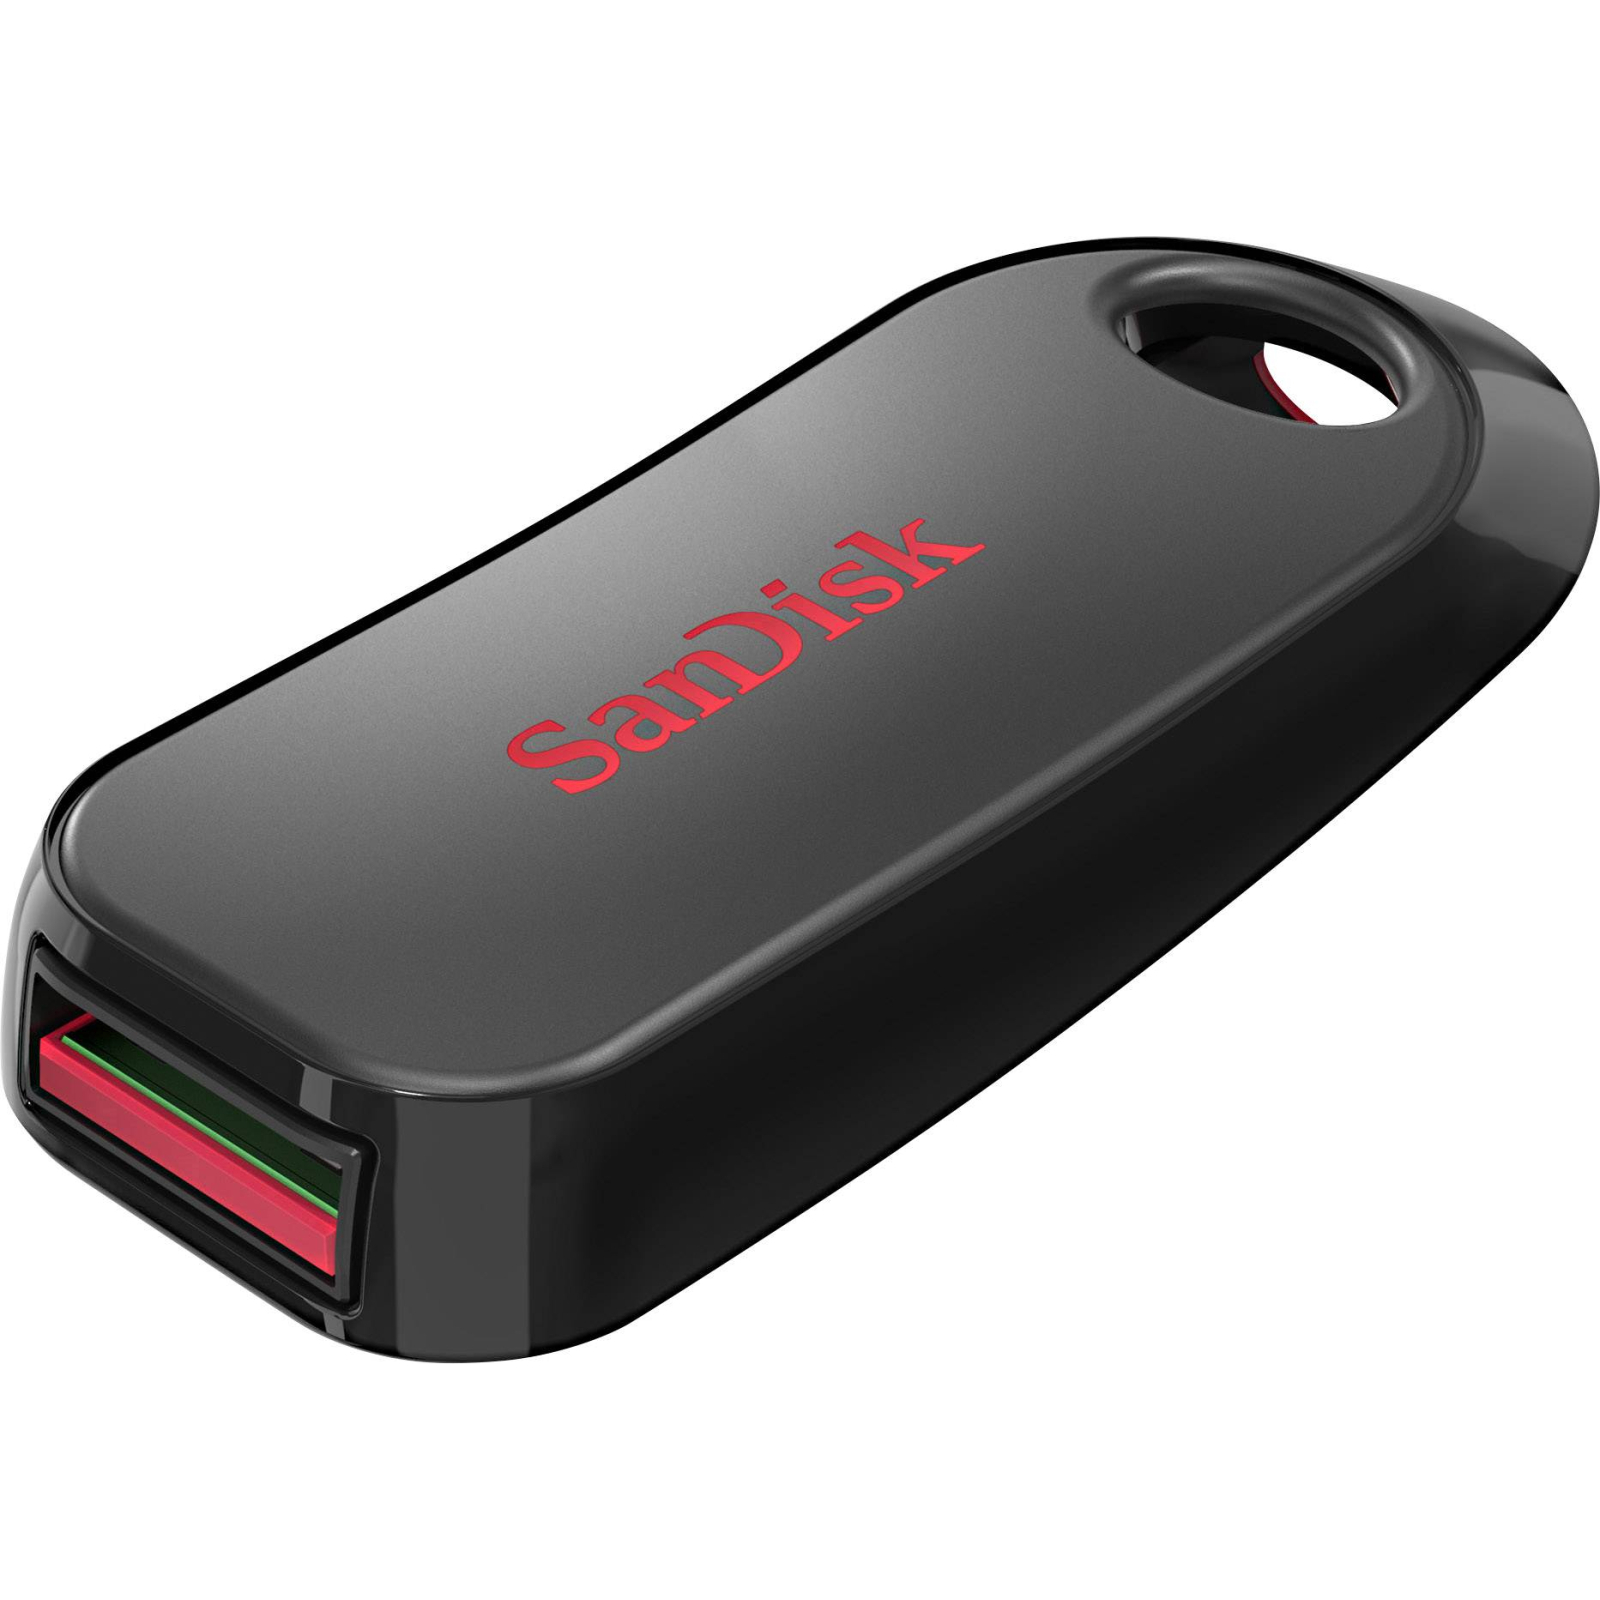 USB флеш накопитель SanDisk 64GB Cruzer Snap USB 2.0 (SDCZ62-064G-G35) изображение 3